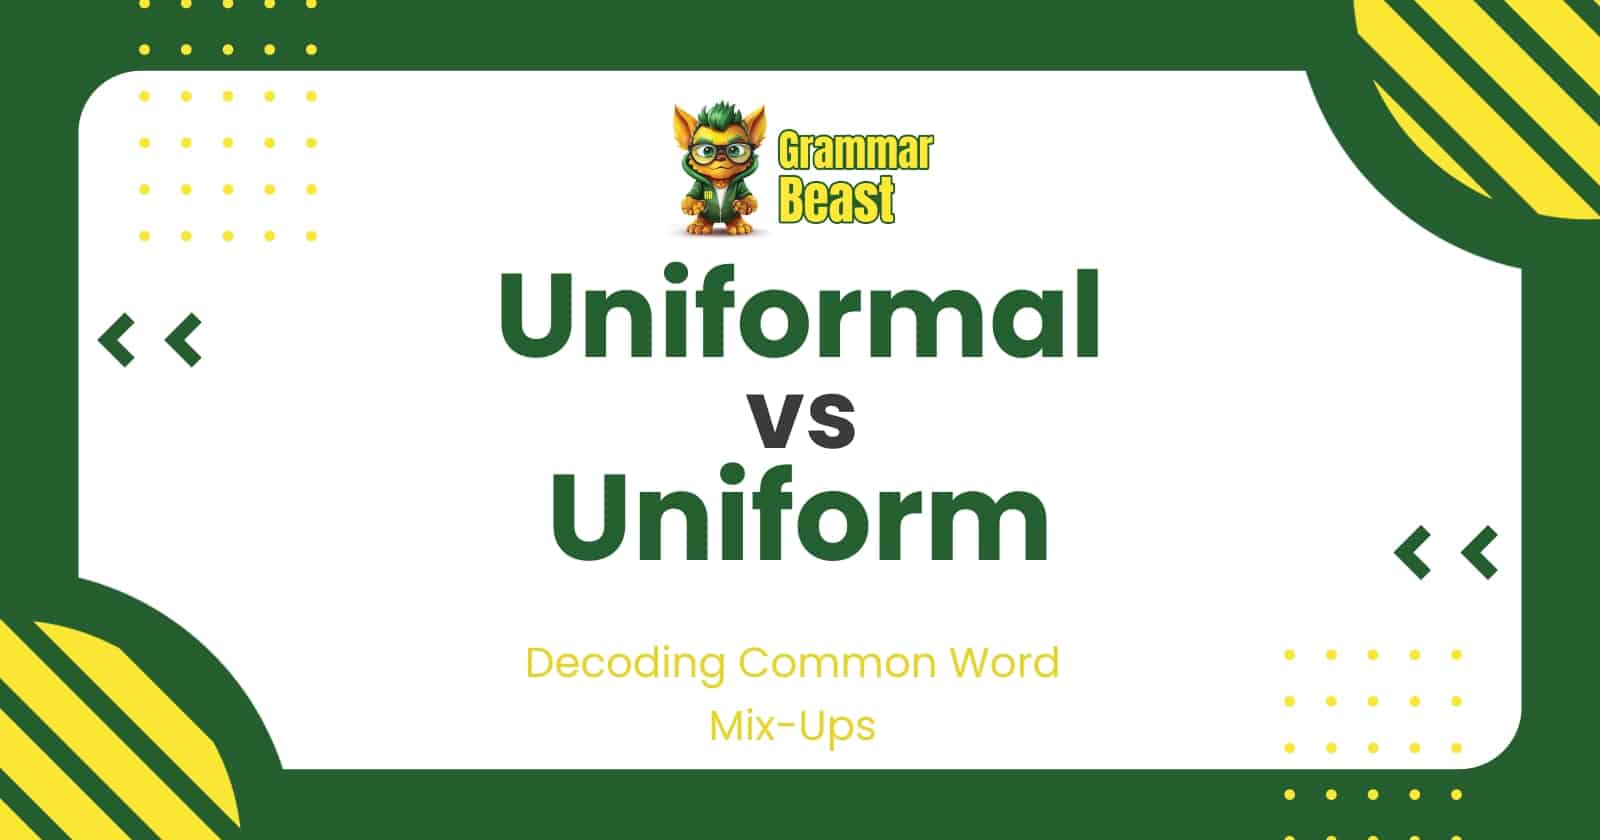 uniformal vs uniform